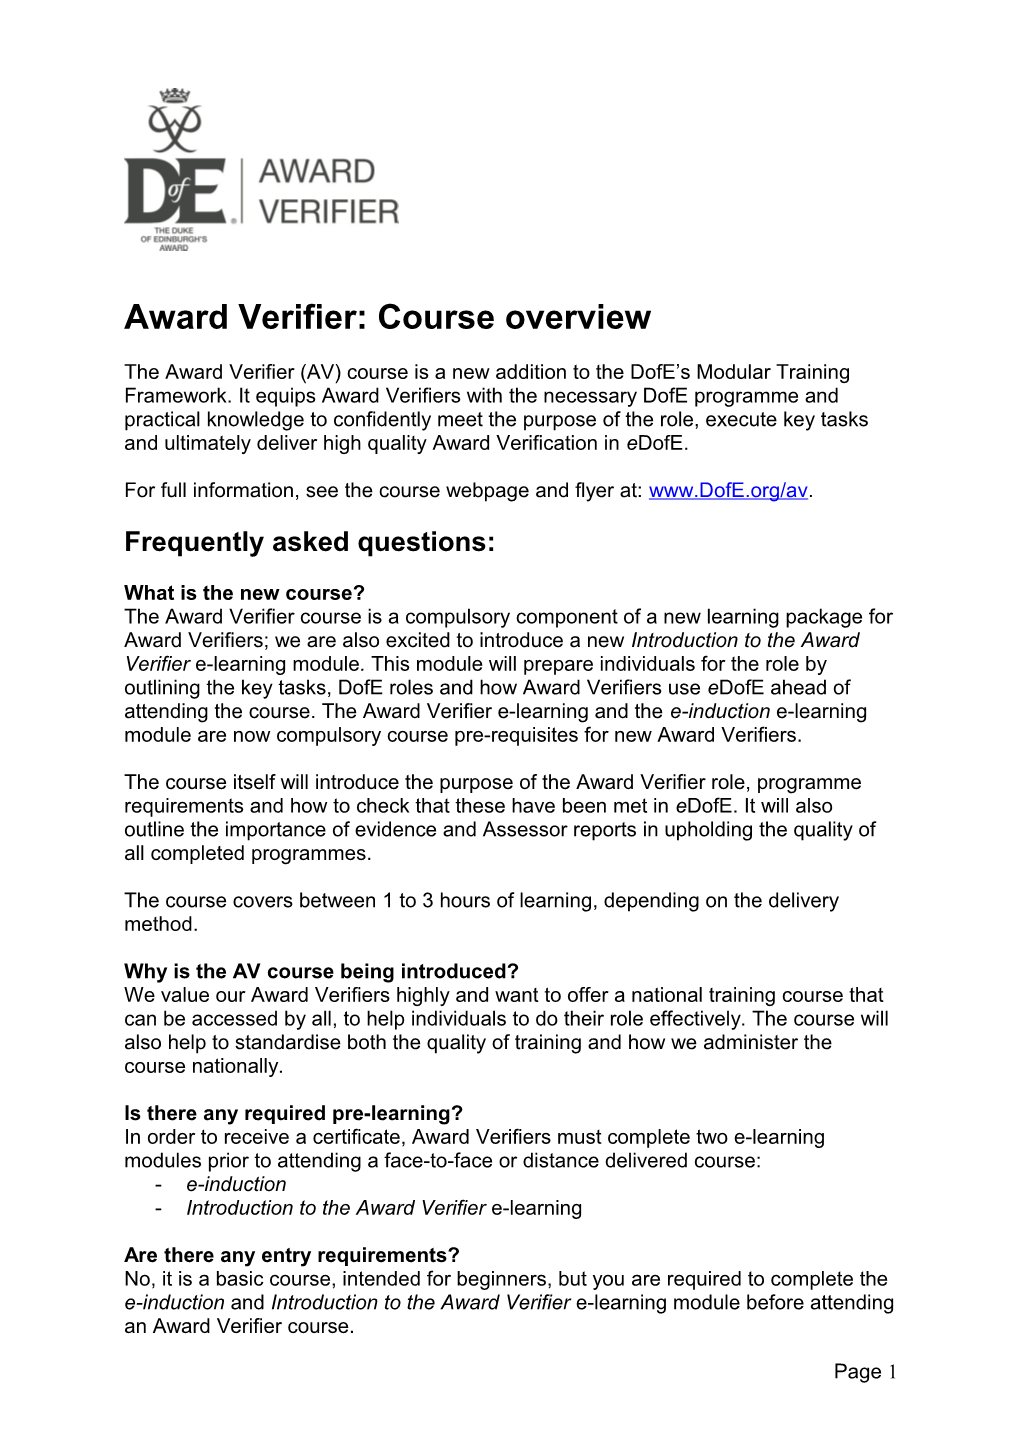 Award Verifier: Course Overview